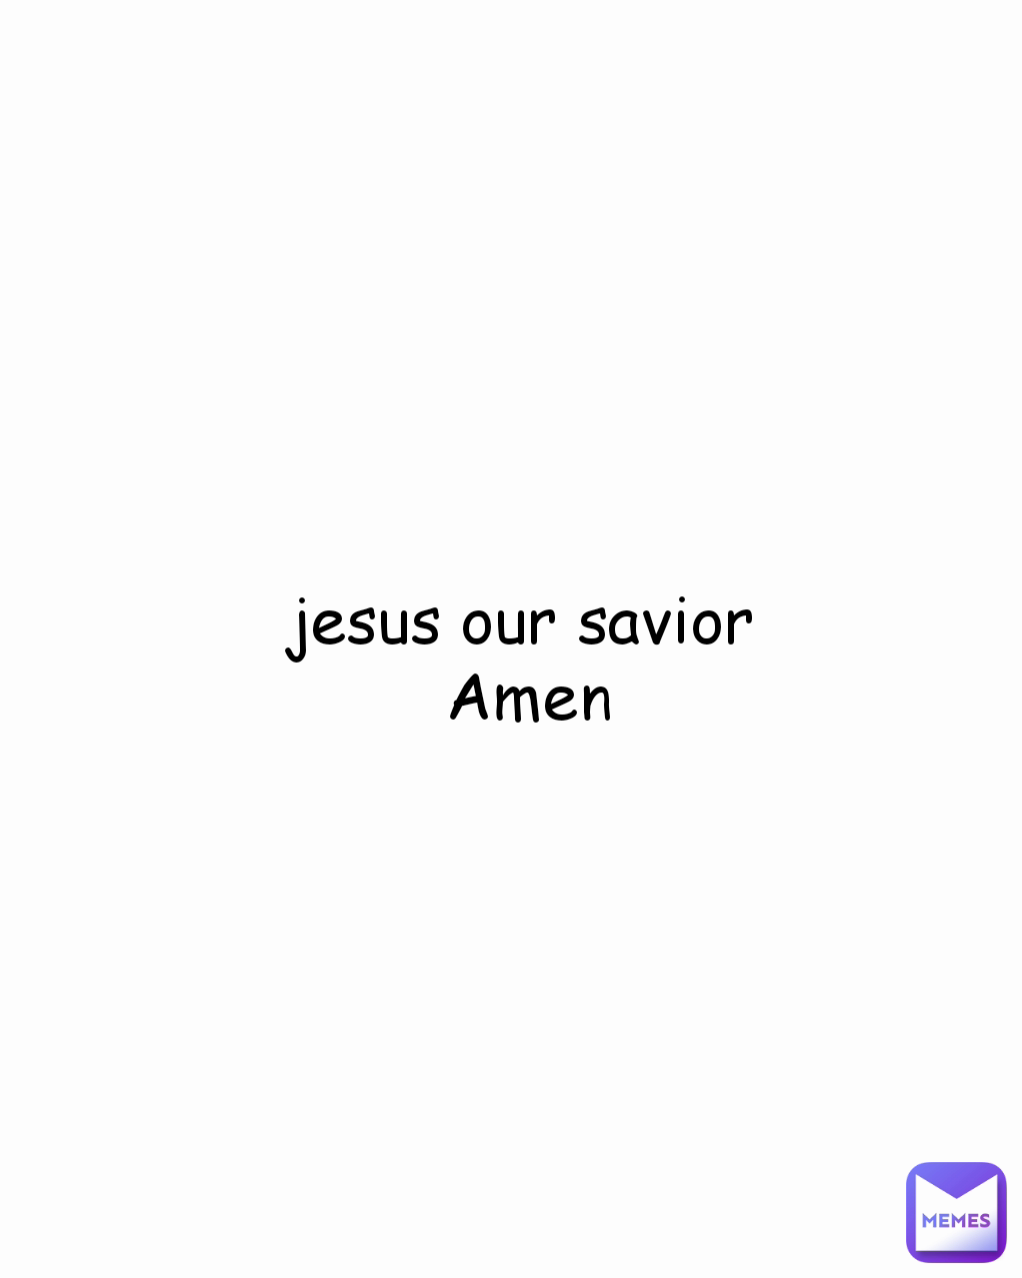 jesus our savior 
Amen